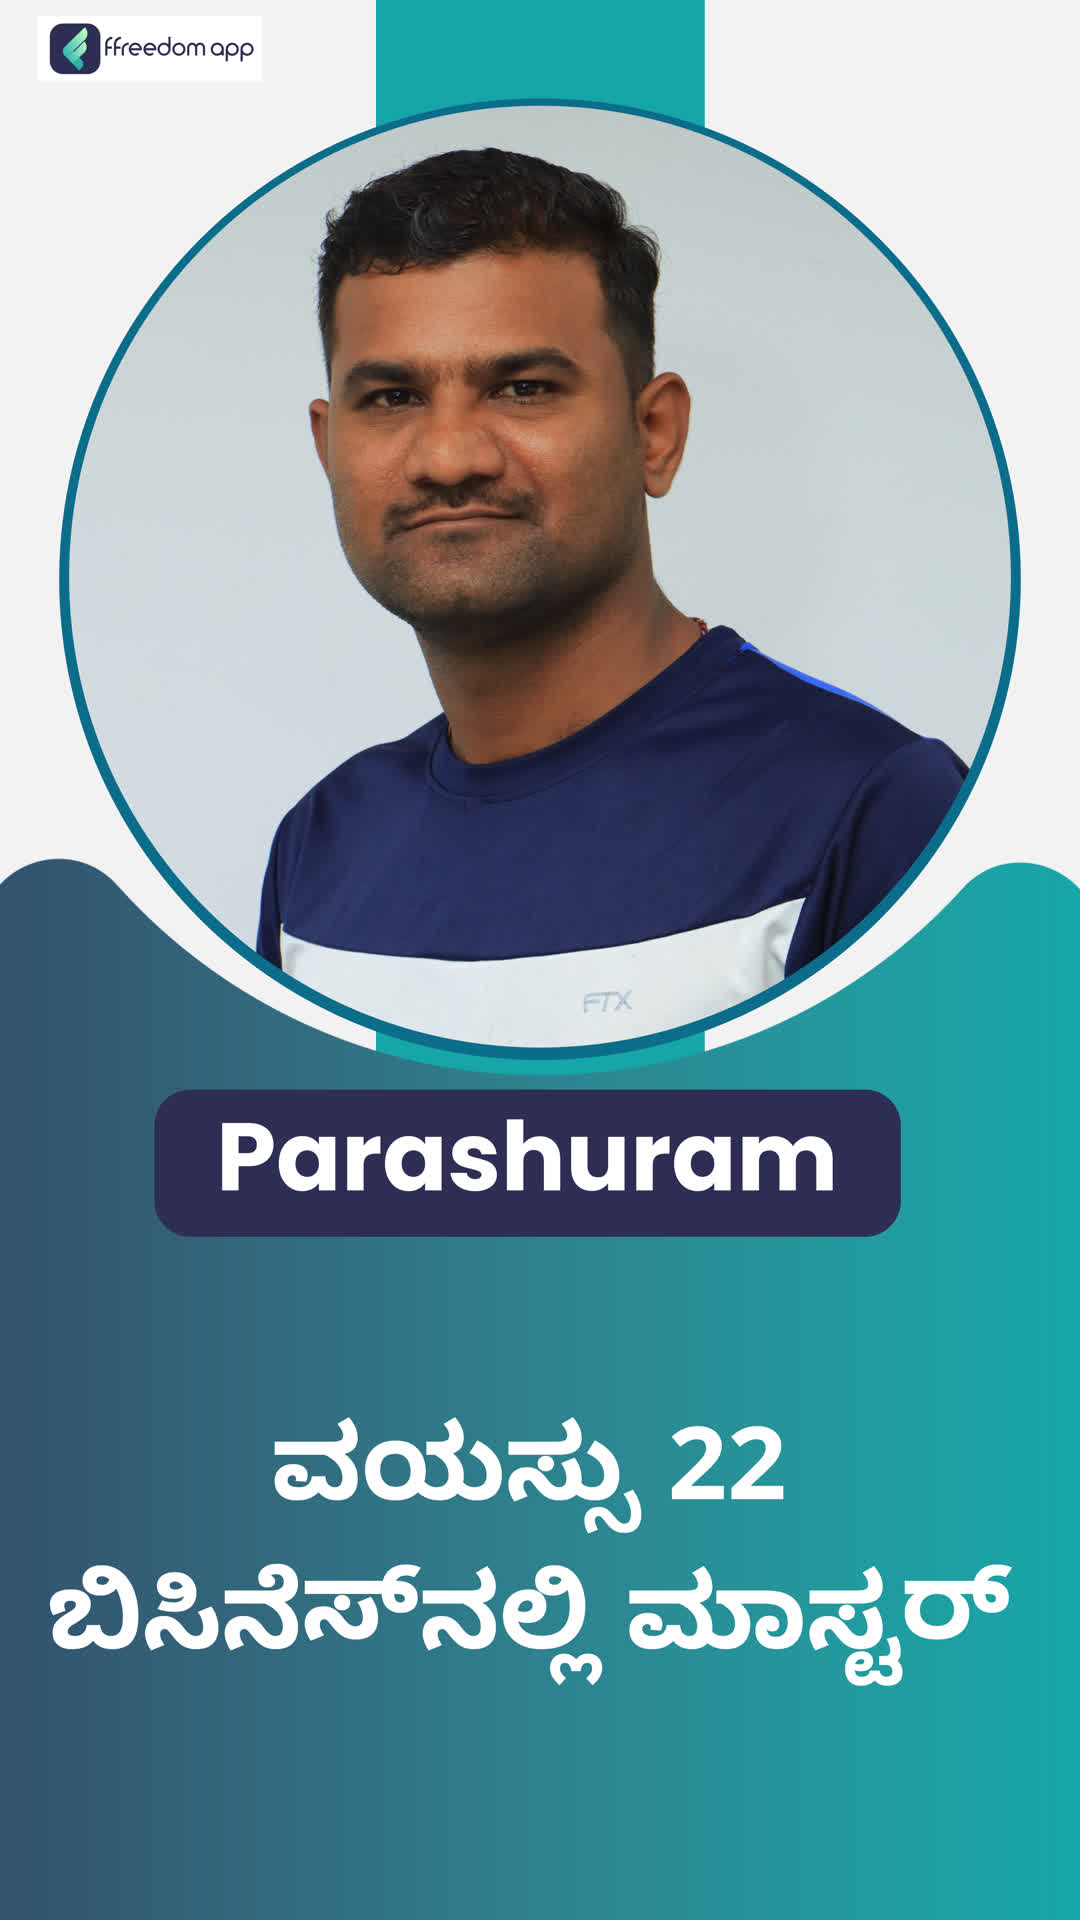 parashuram's Honest Review of ffreedom app - Koppal ,Karnataka